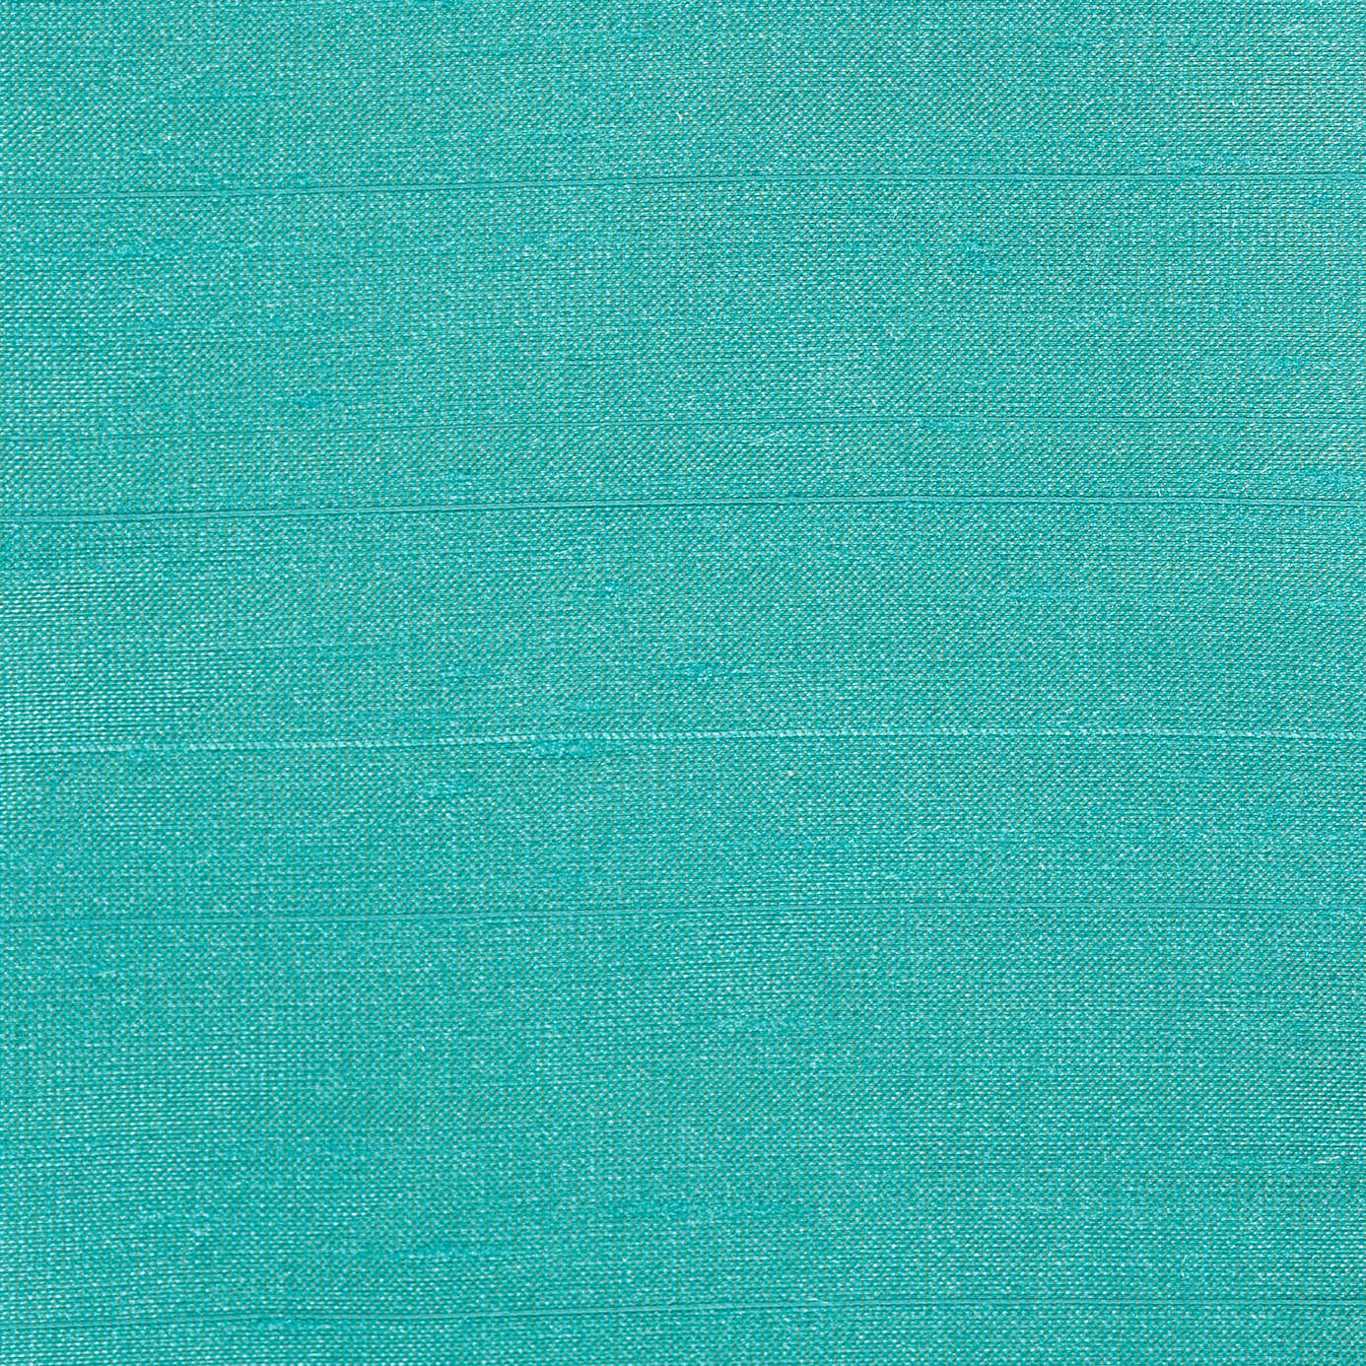 Deflect Fabric by Harlequin - HPOL440560 - Aruba Blue